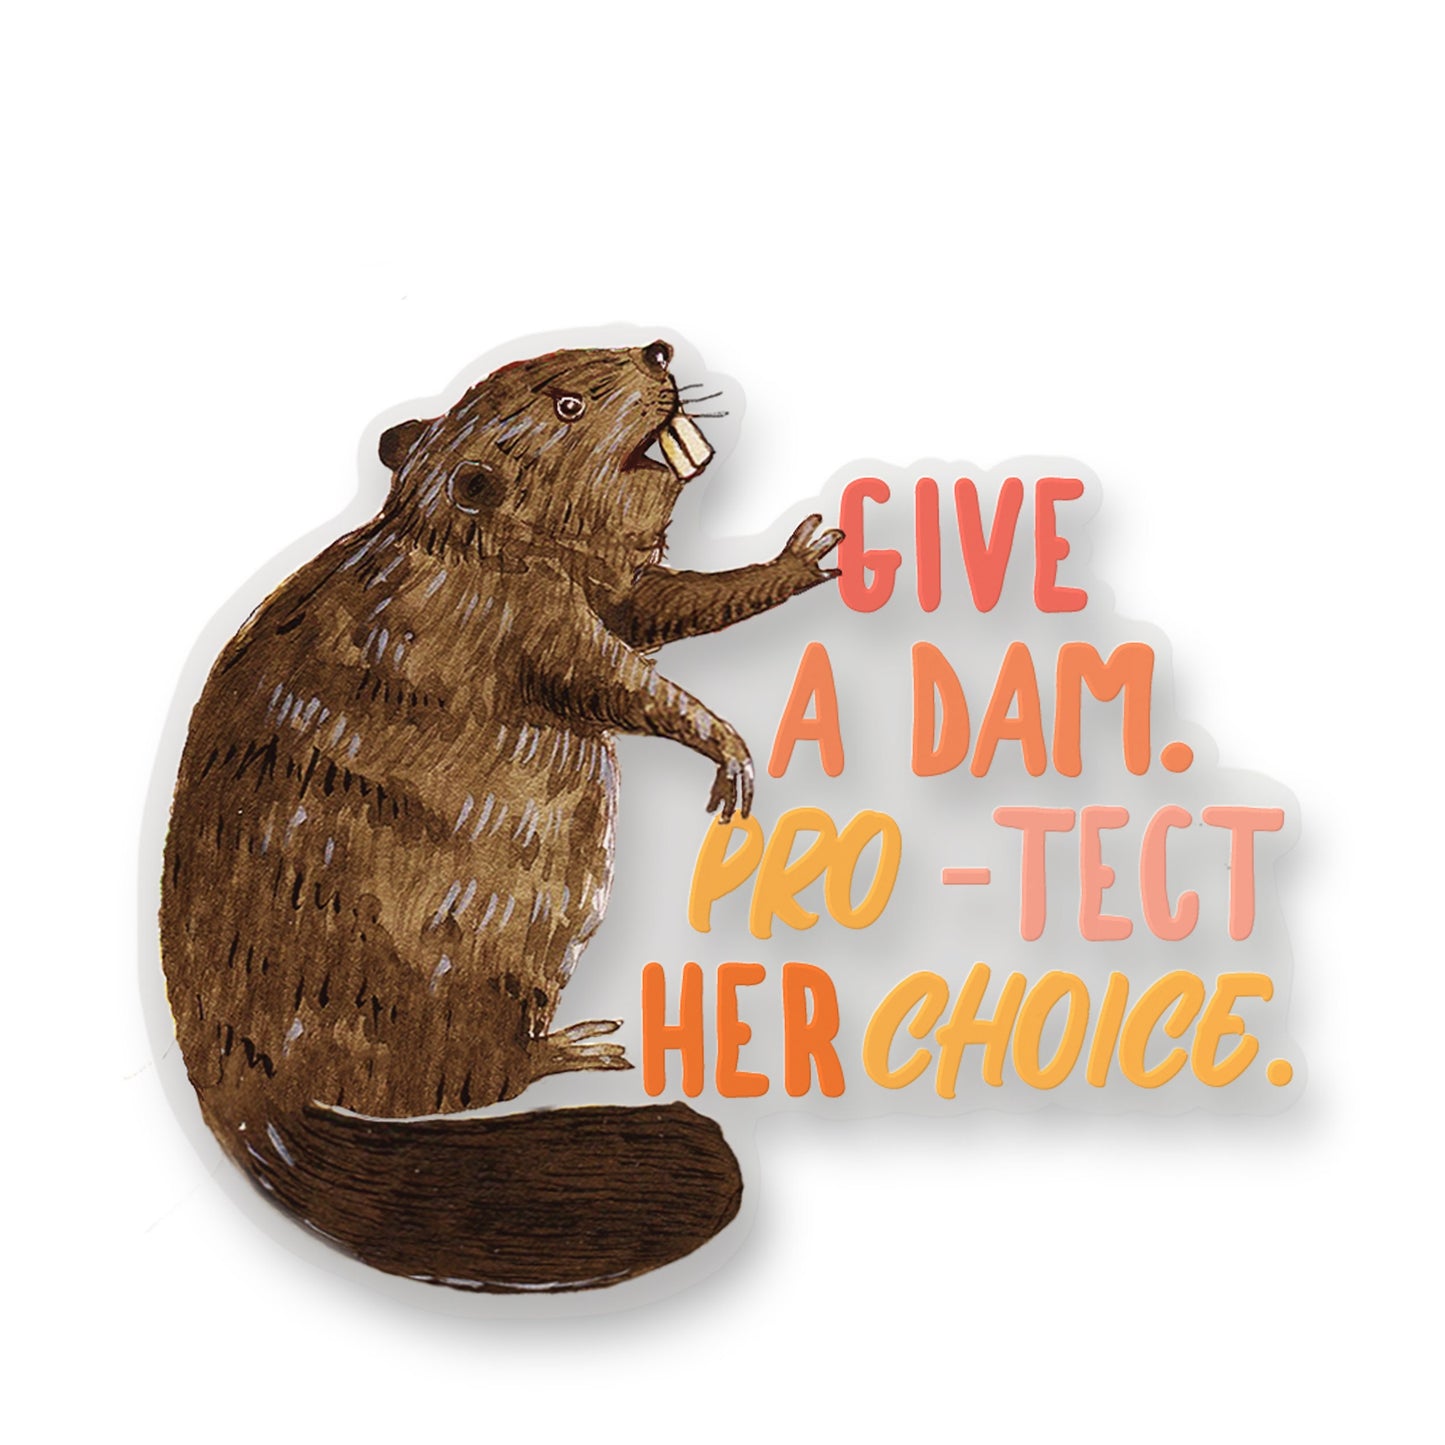 Beaver Pro Choice Sticker - Give A Damn Protect Her Choice - Feminist Female Empowerment Art - Waterproof Transparent Stickers